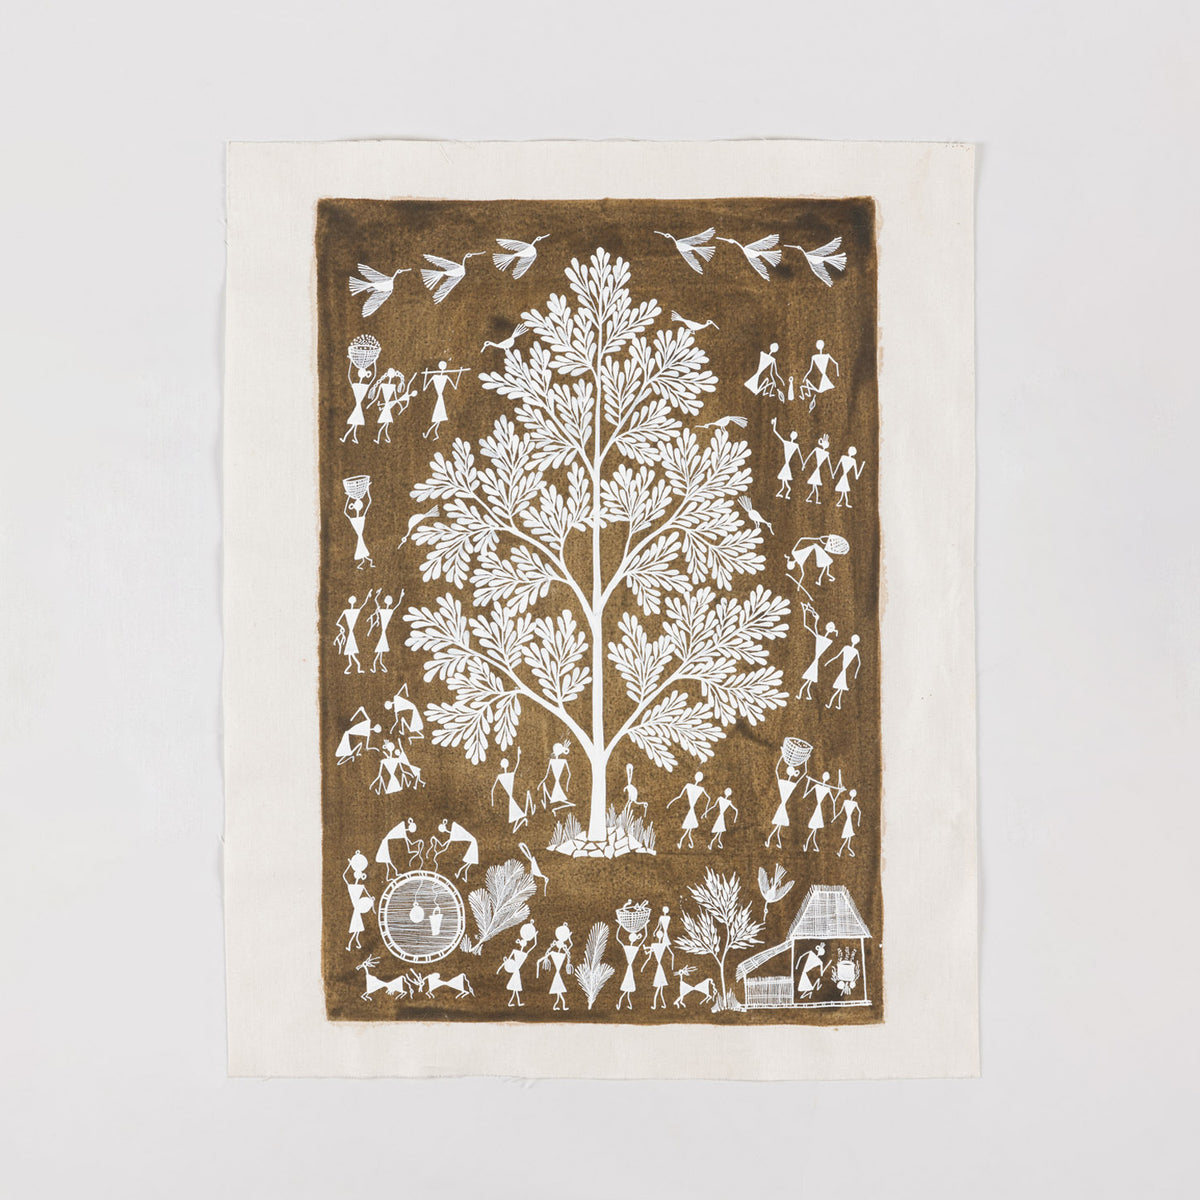 Warli Painting Tree of Life - 17x21 Unframed